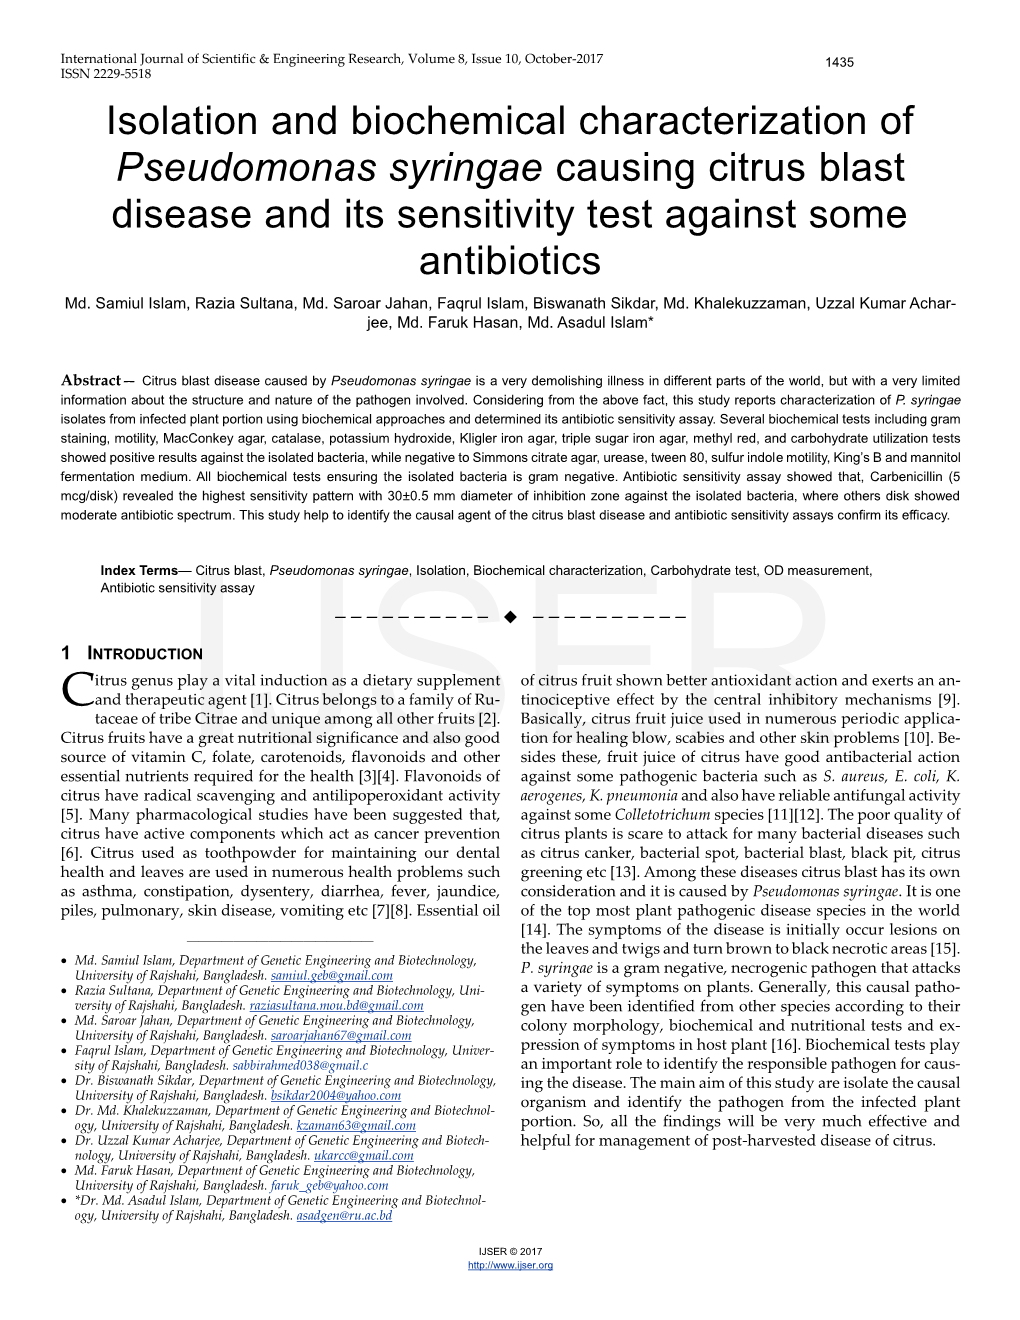 Isolation and Biochemical Characterization of Pseudomonas Syringae Causing Citrus Blast Disease and Its Sensitivity Test Against Some Antibiotics Md